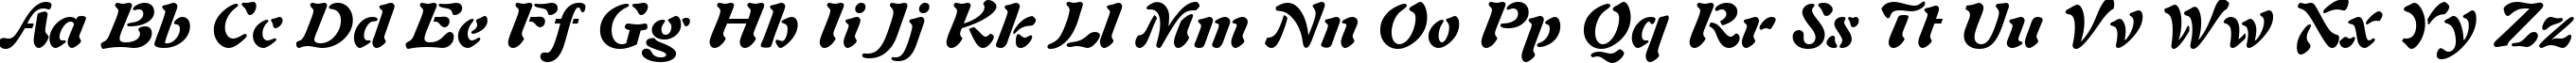 Пример написания английского алфавита шрифтом Freeform 721 Black Italic BT